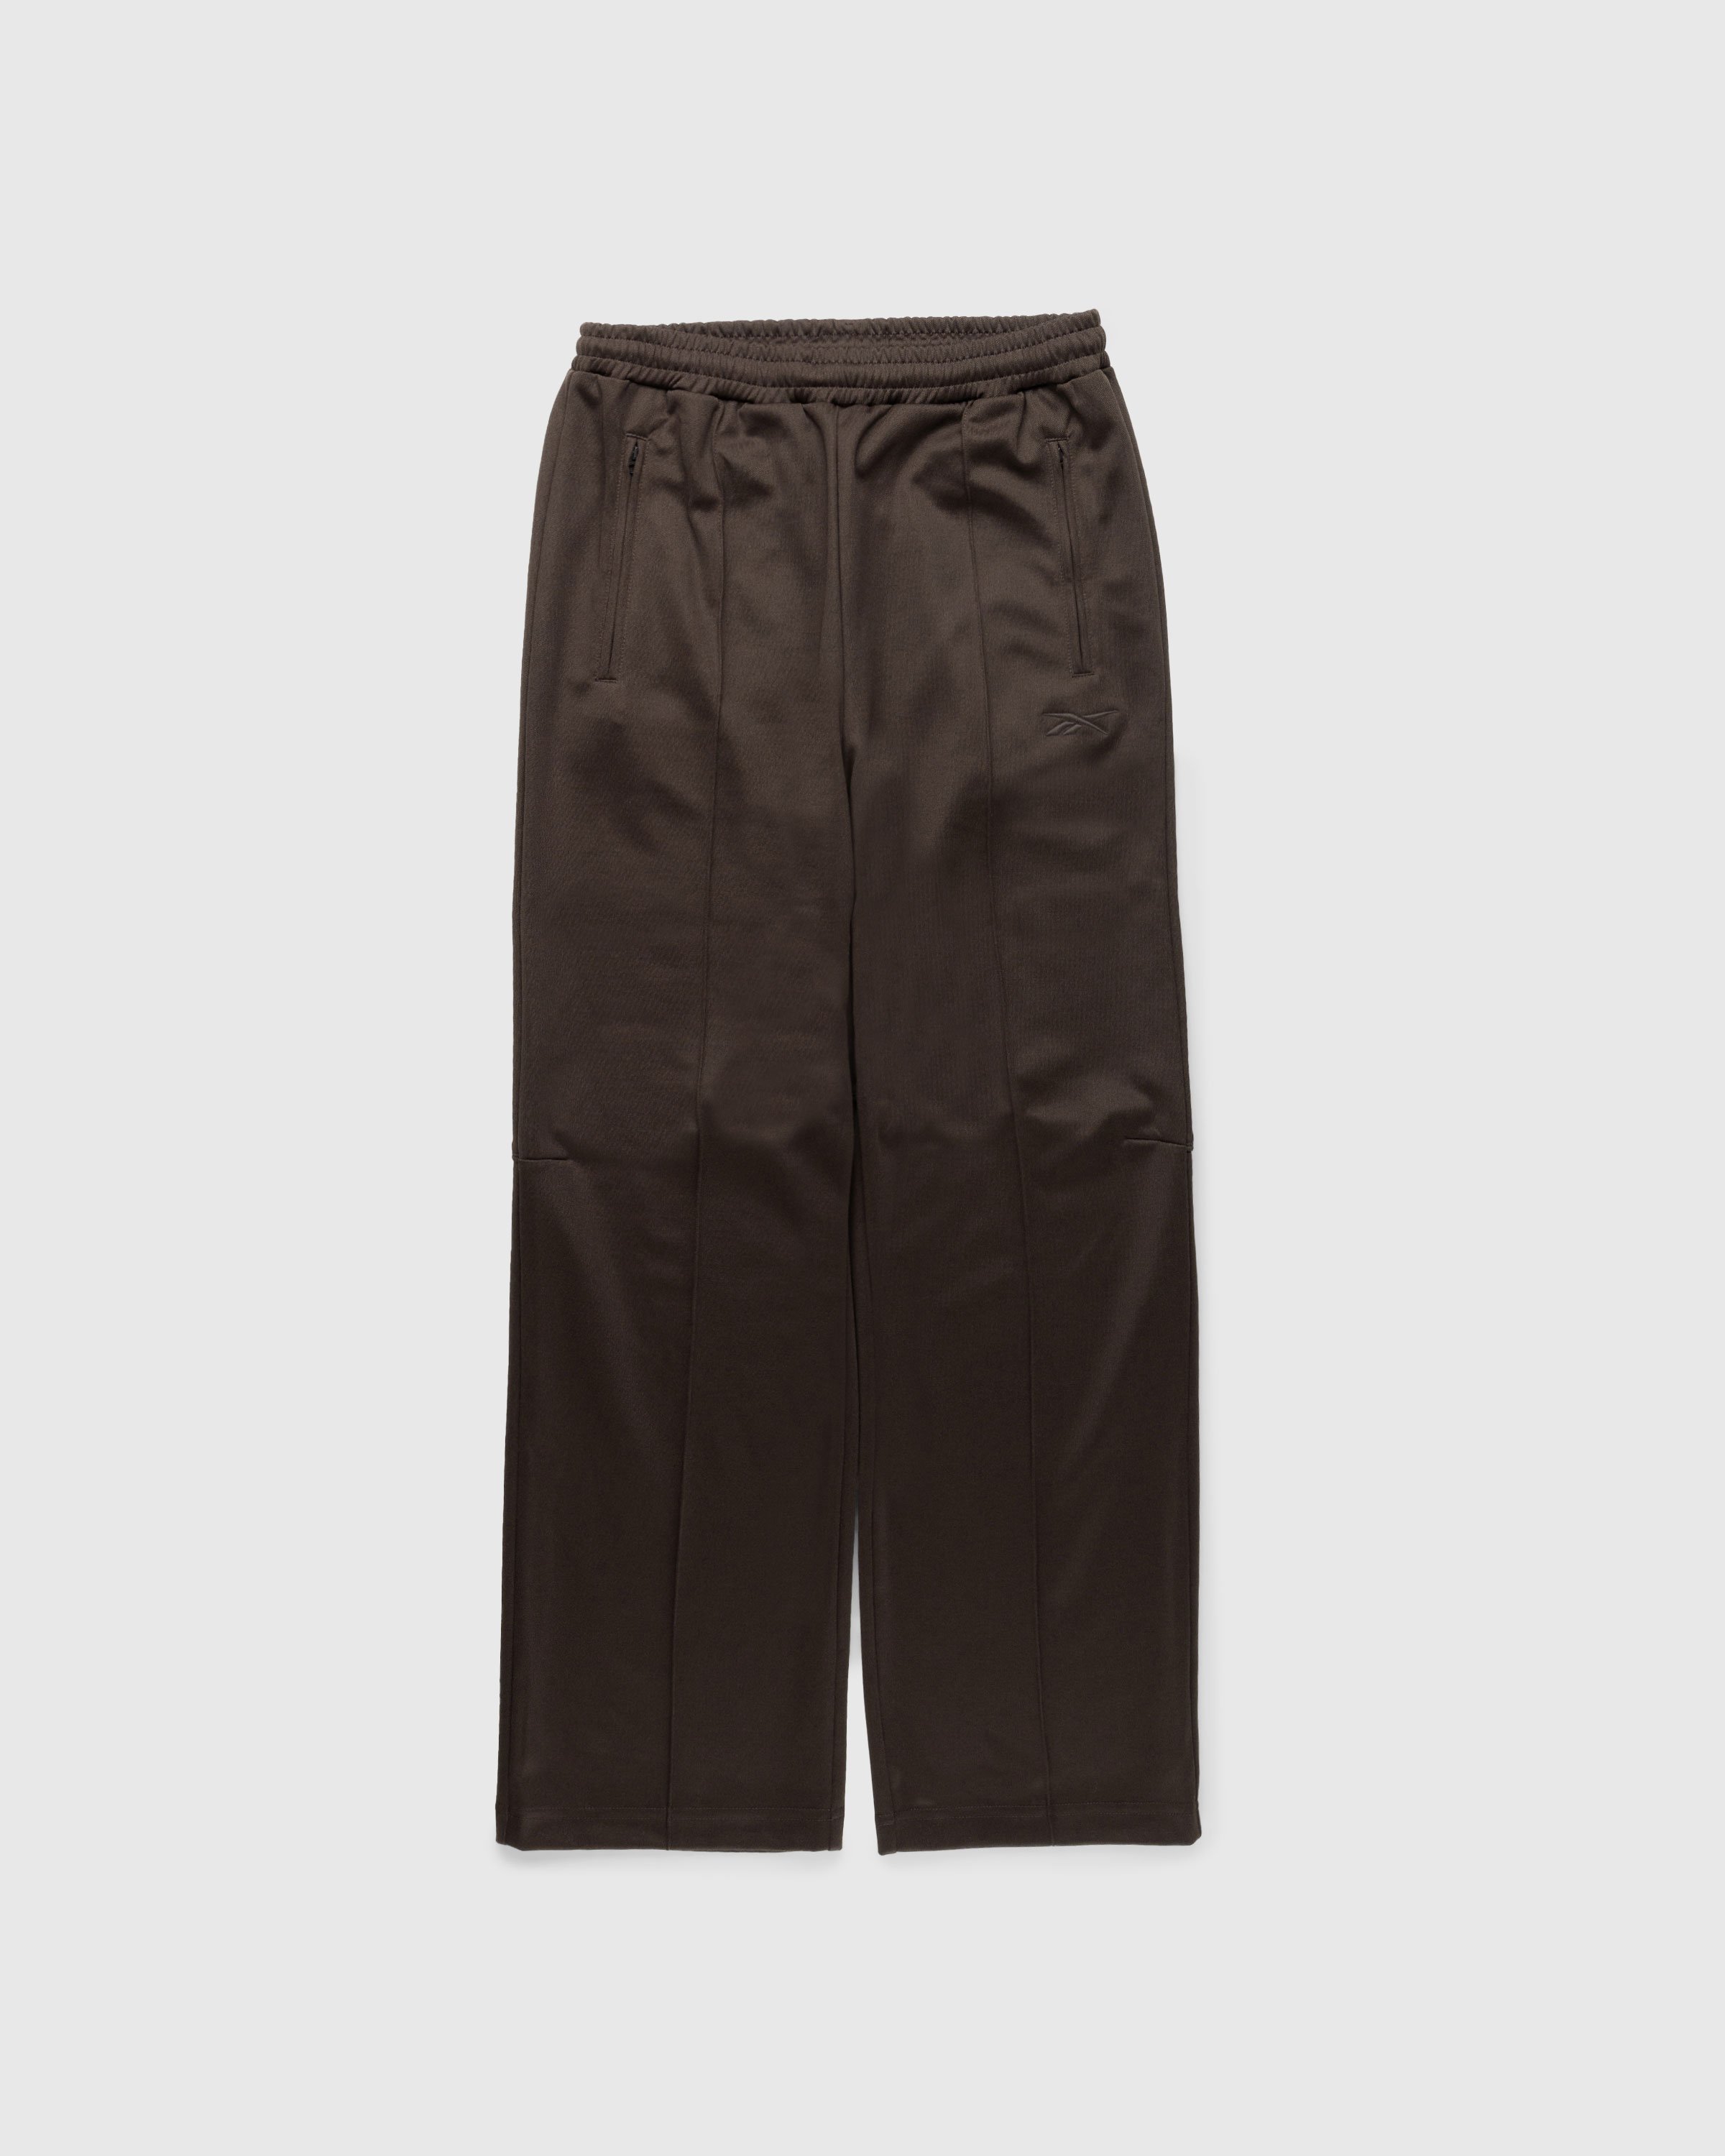 Reebok - Piped Track Pants Moro - Clothing - Brown - Image 1